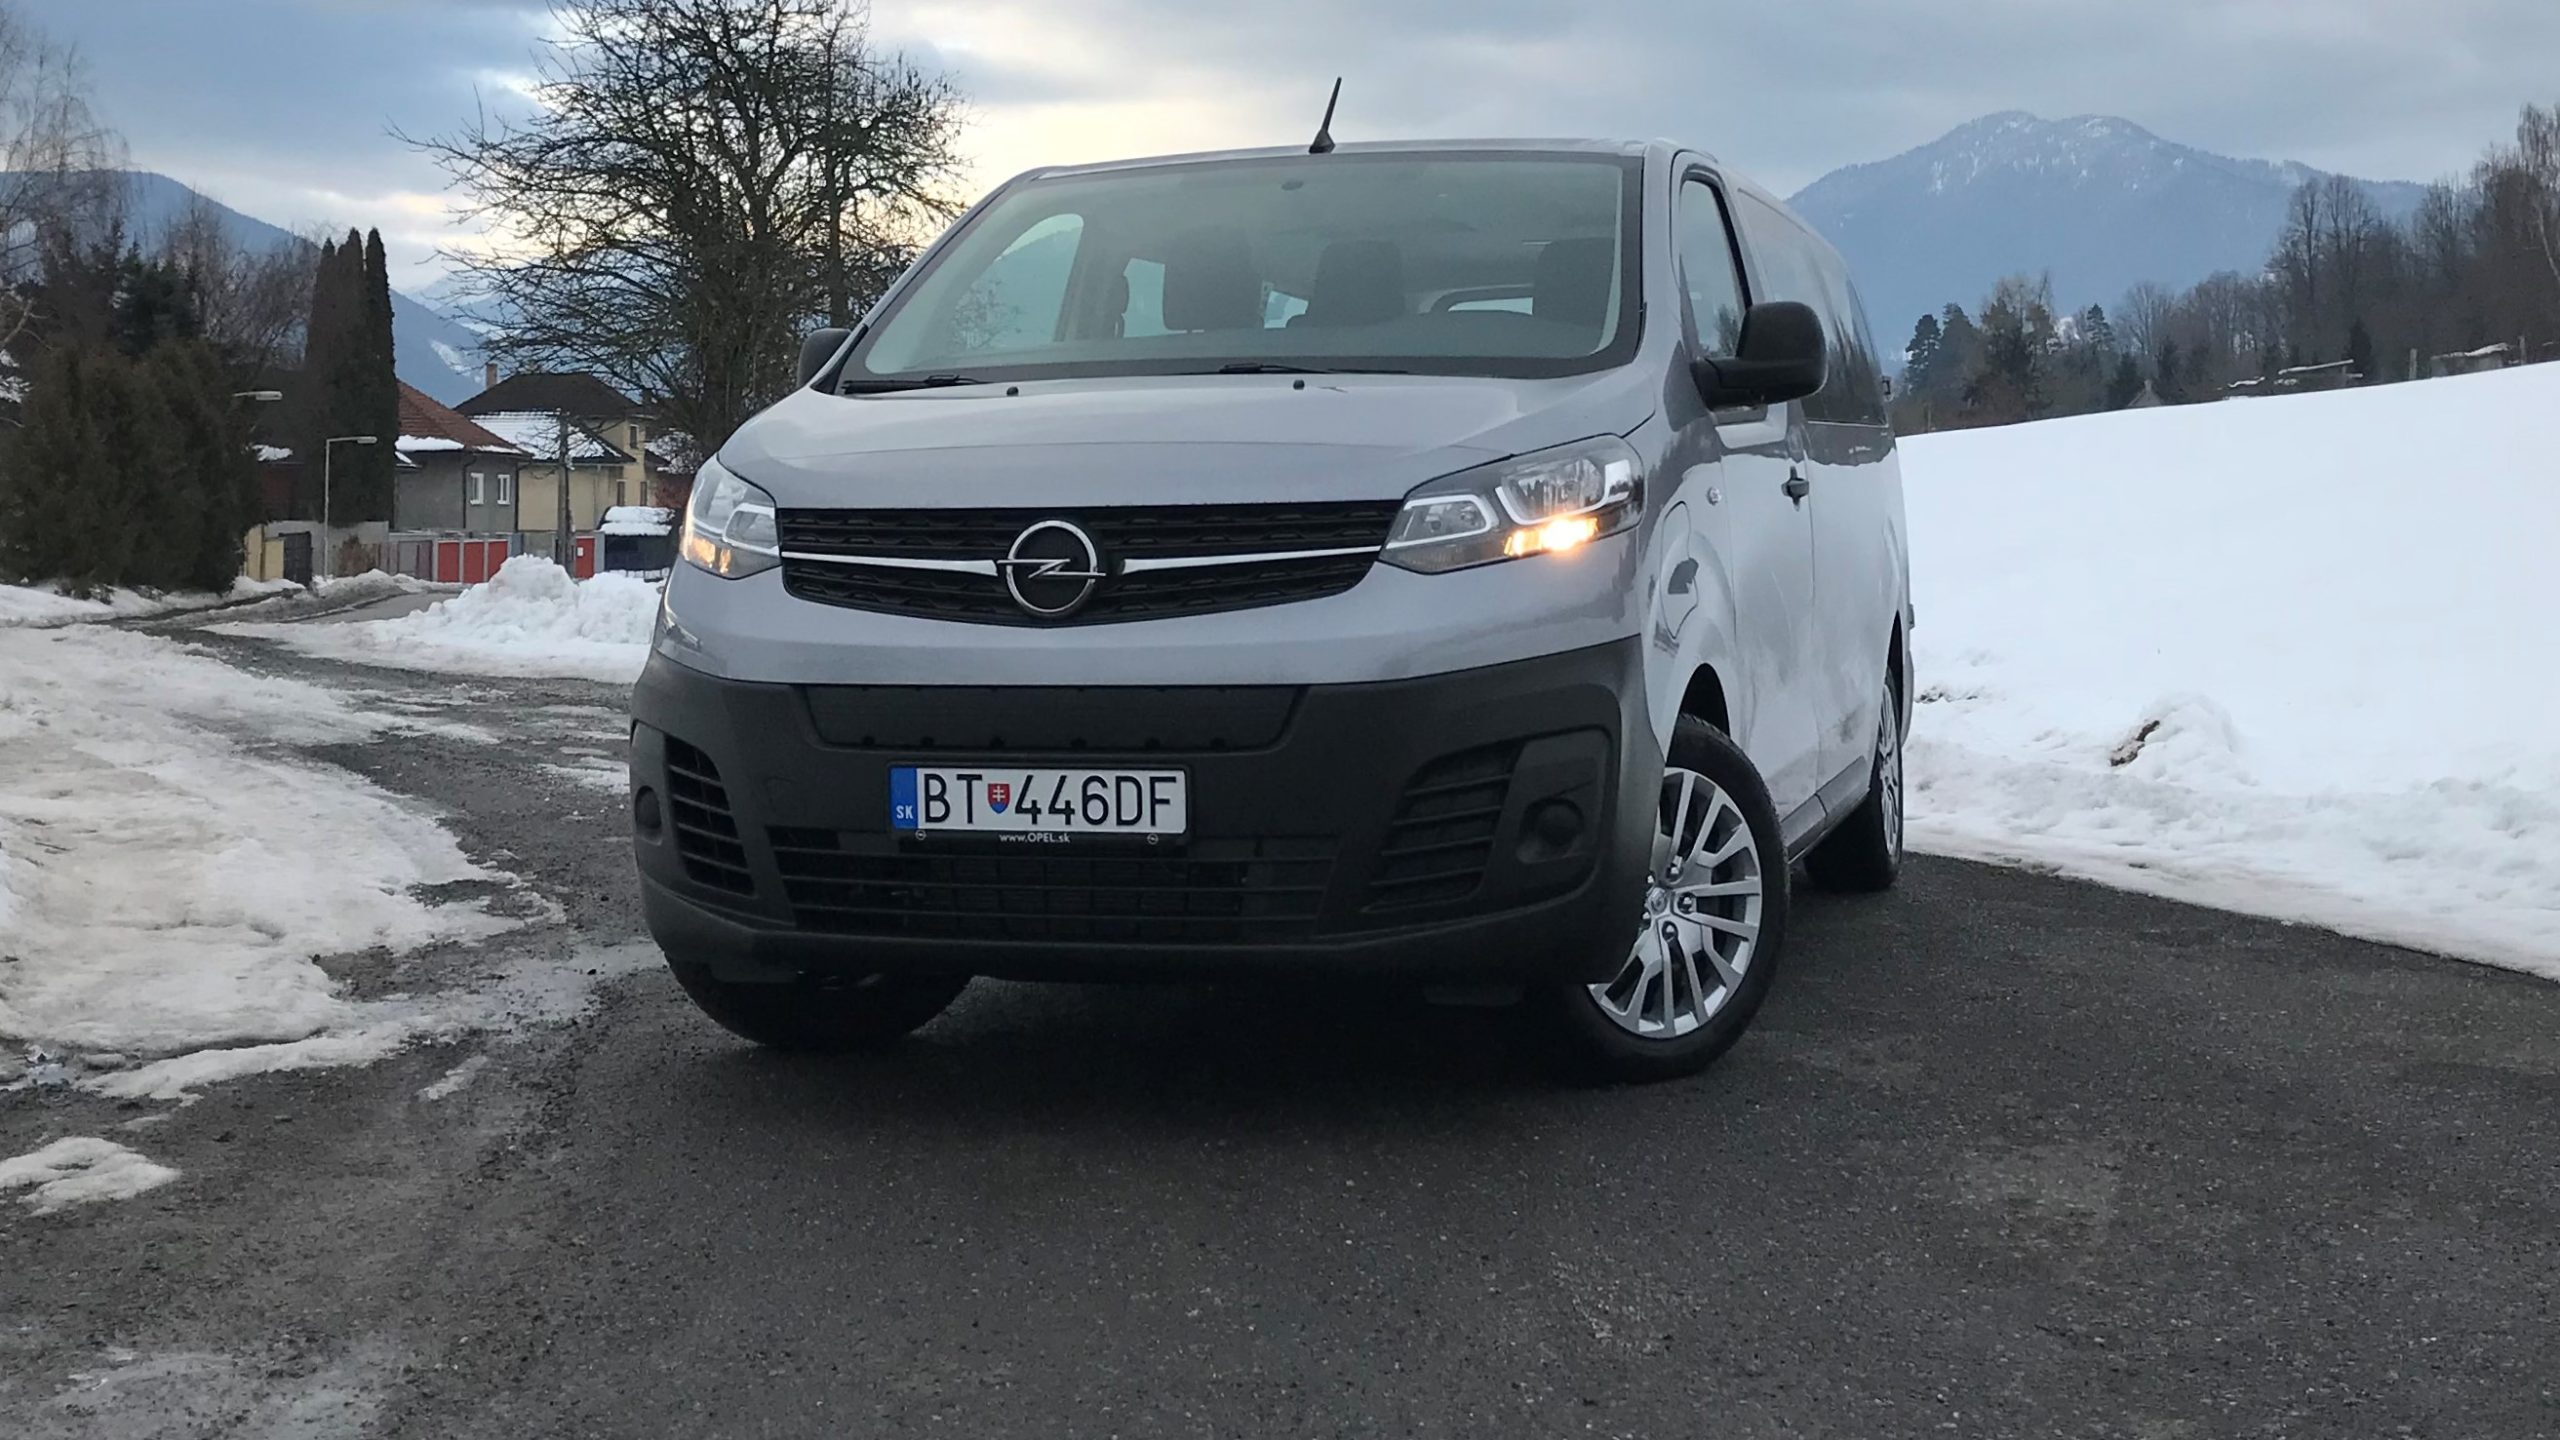 2022 Opel Vivaro-e Combi 50 kWh test recenzia skúsenosti